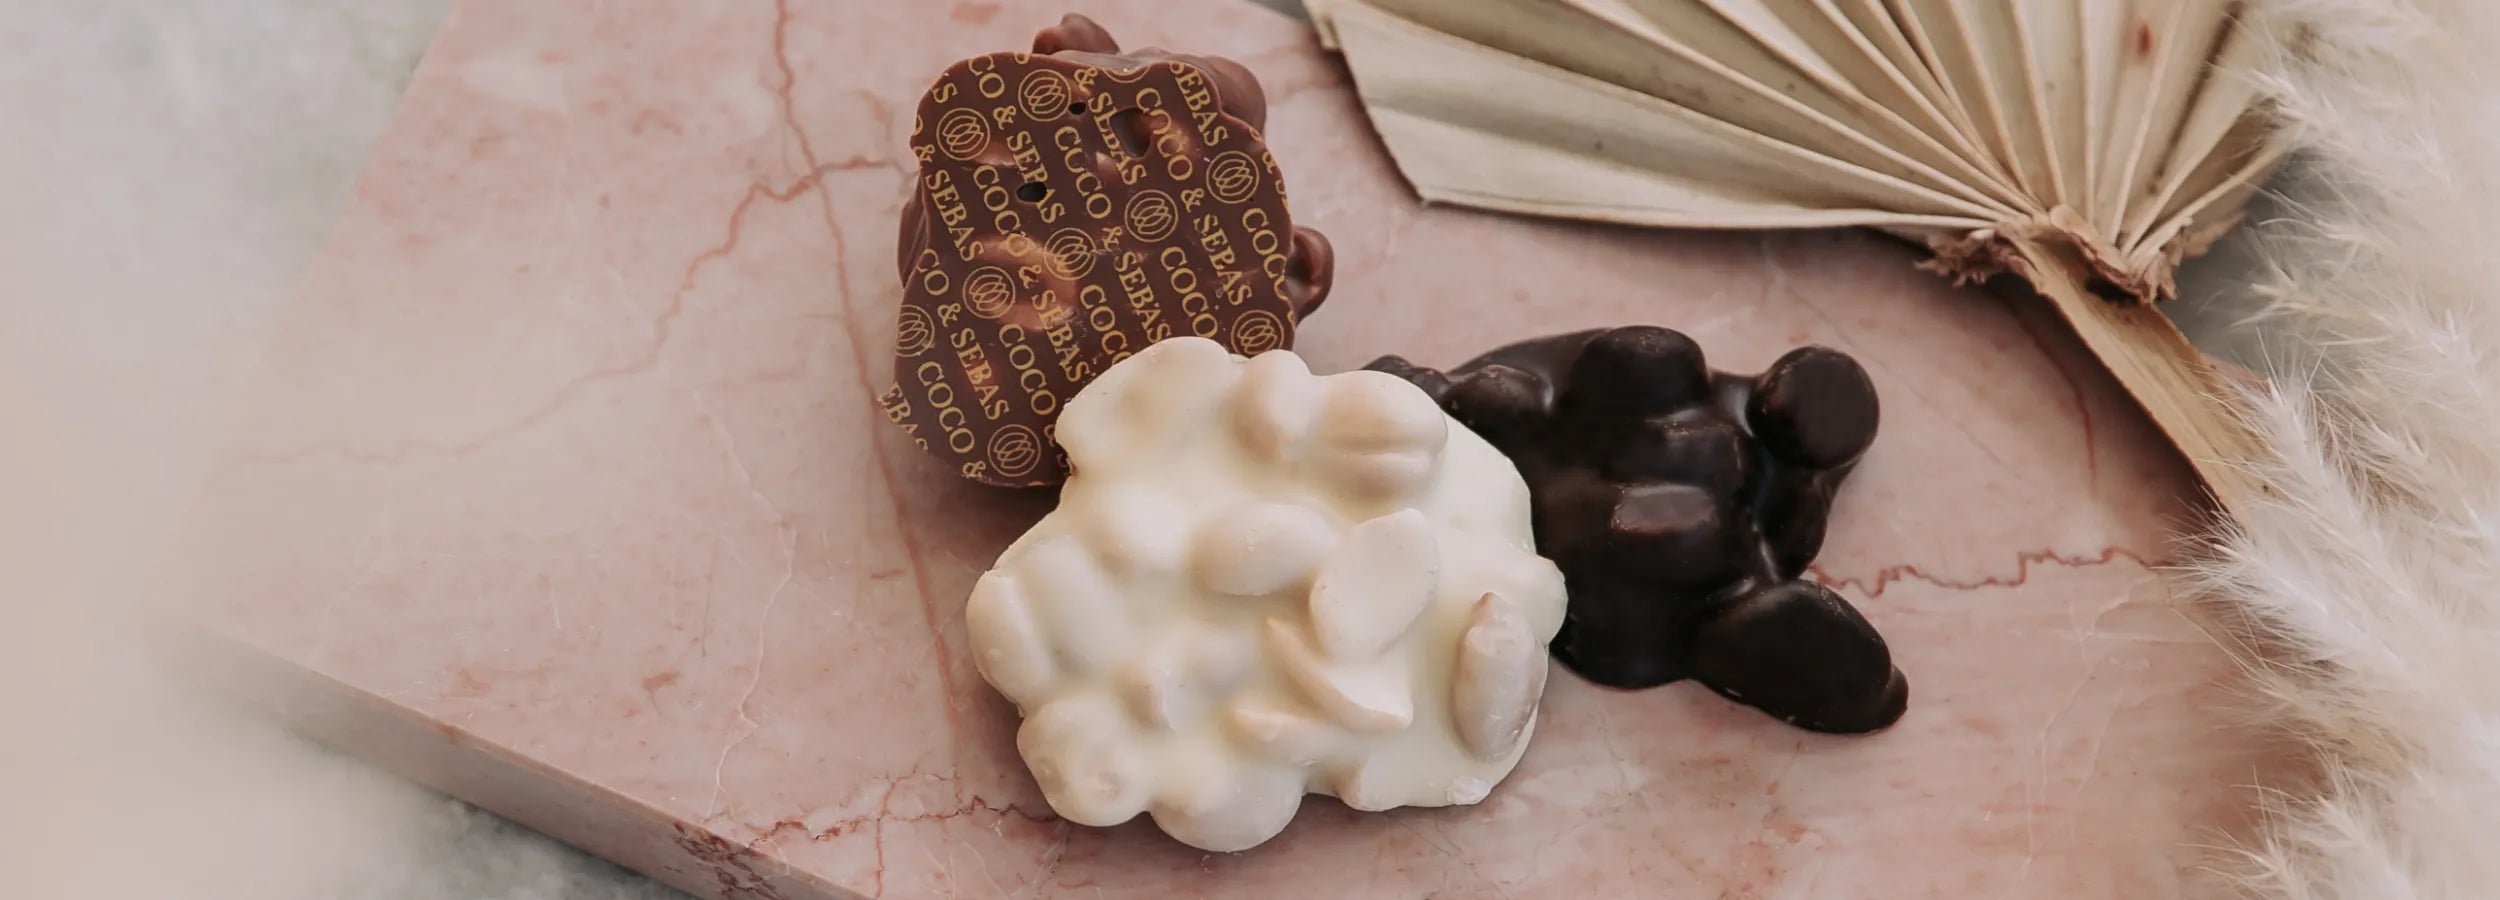 Pindarotjes melkchocolade, witte chocolade en pure chocolade van Coco & Sebas